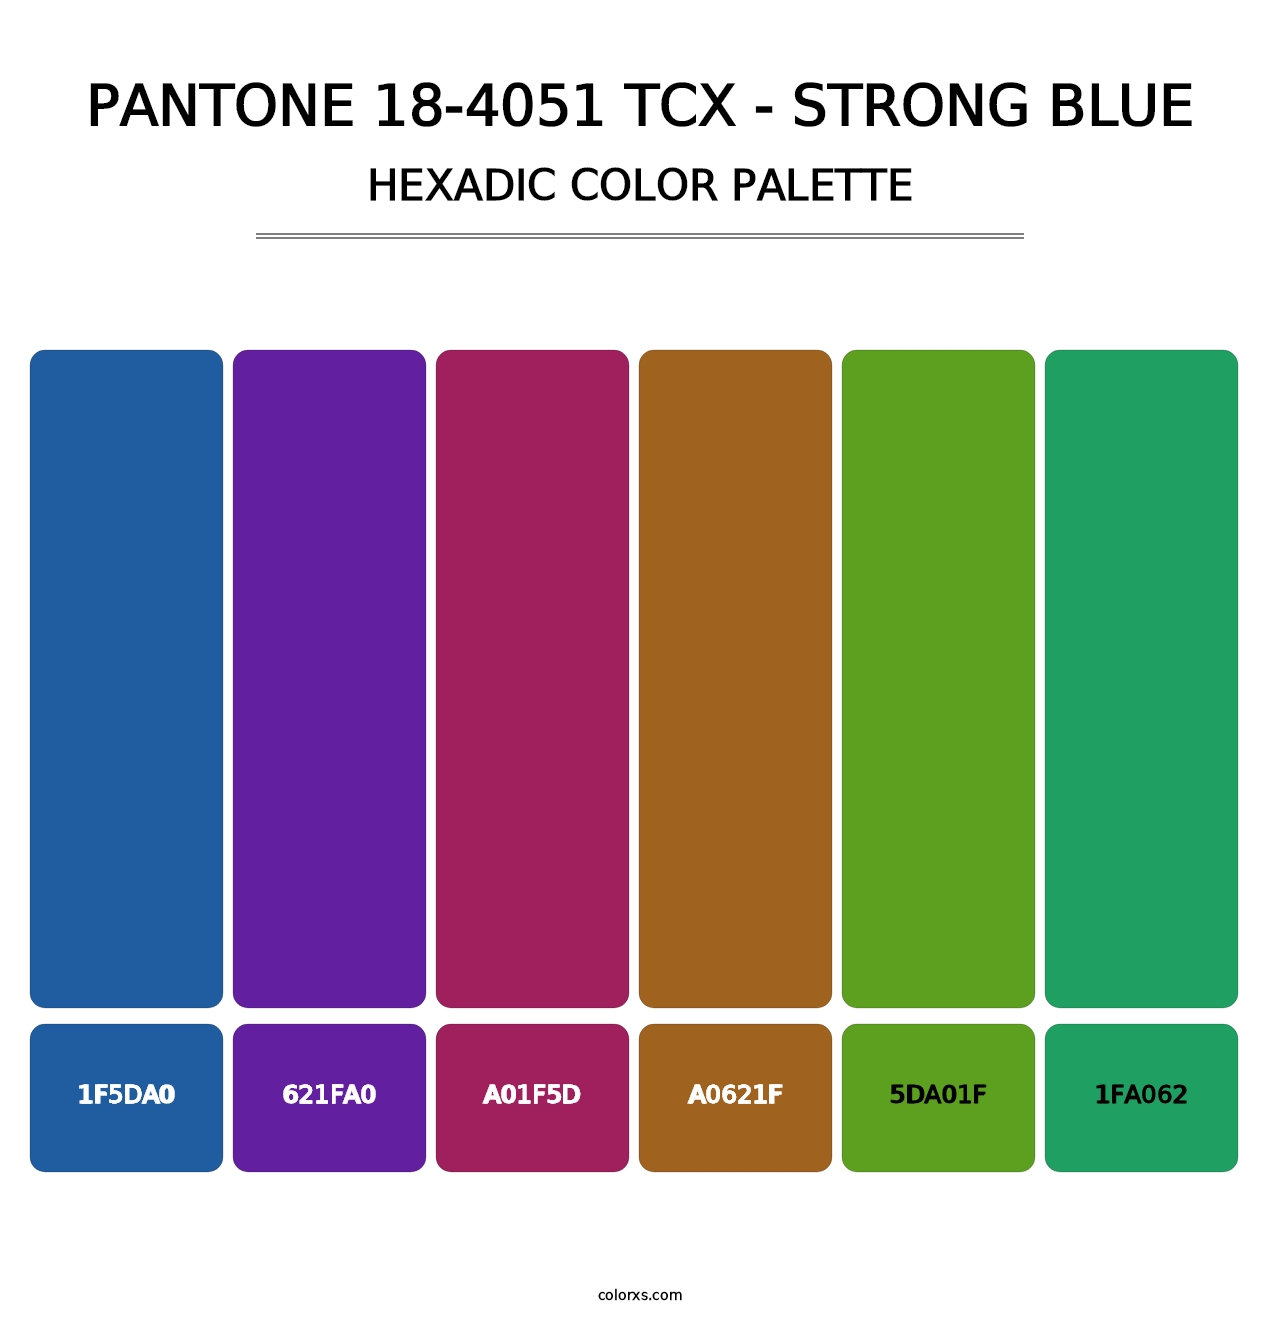 PANTONE 18-4051 TCX - Strong Blue - Hexadic Color Palette